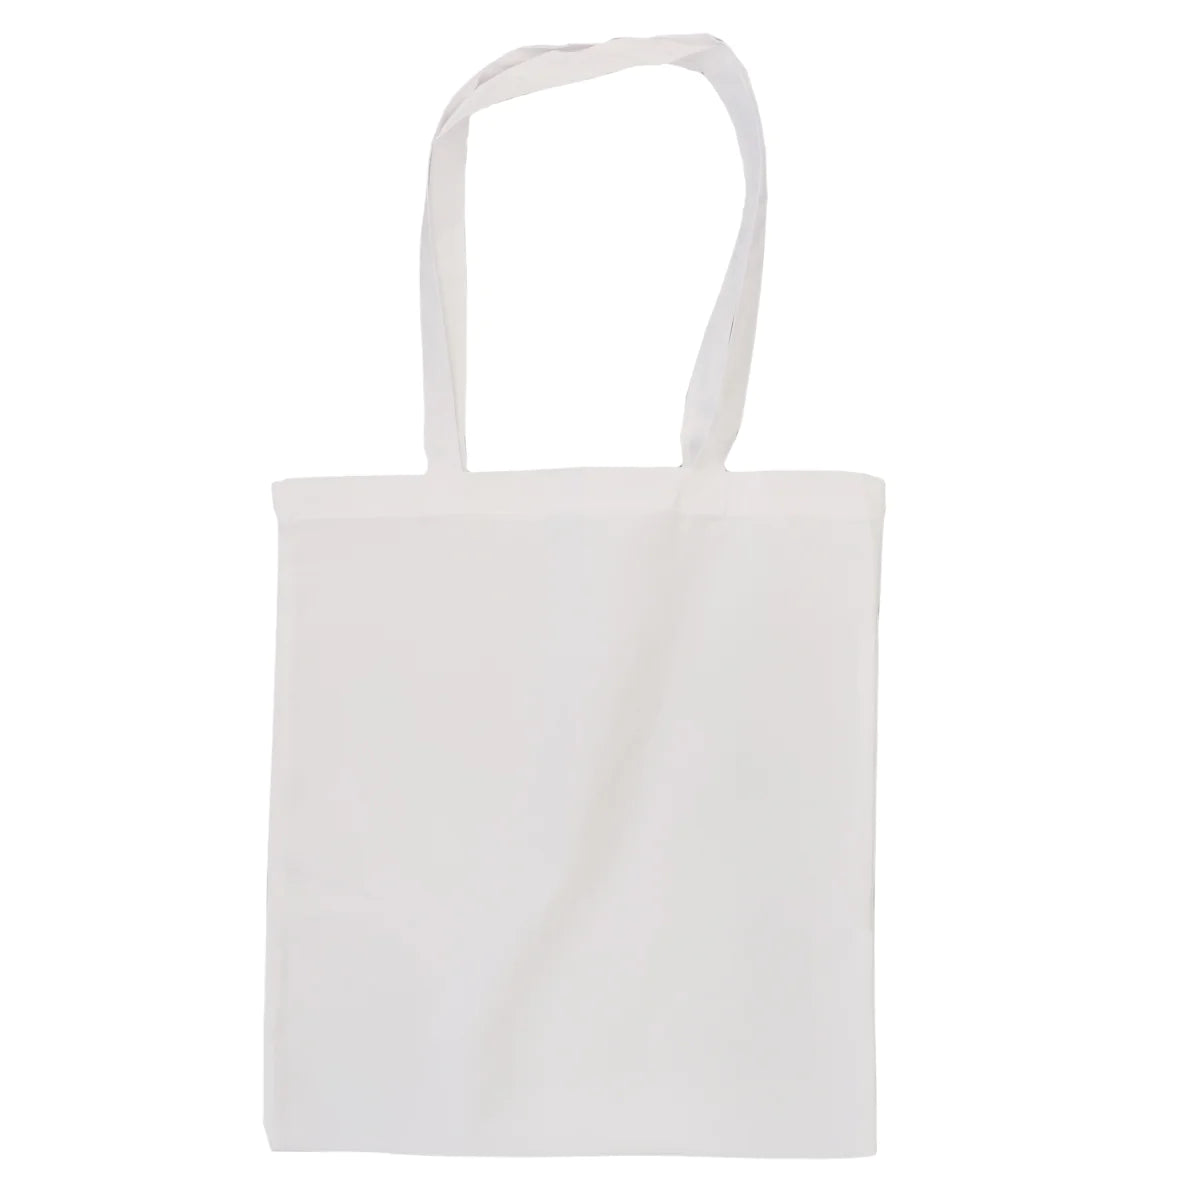 Tote Bag Canvas White 38cm x 39cm Long Handles